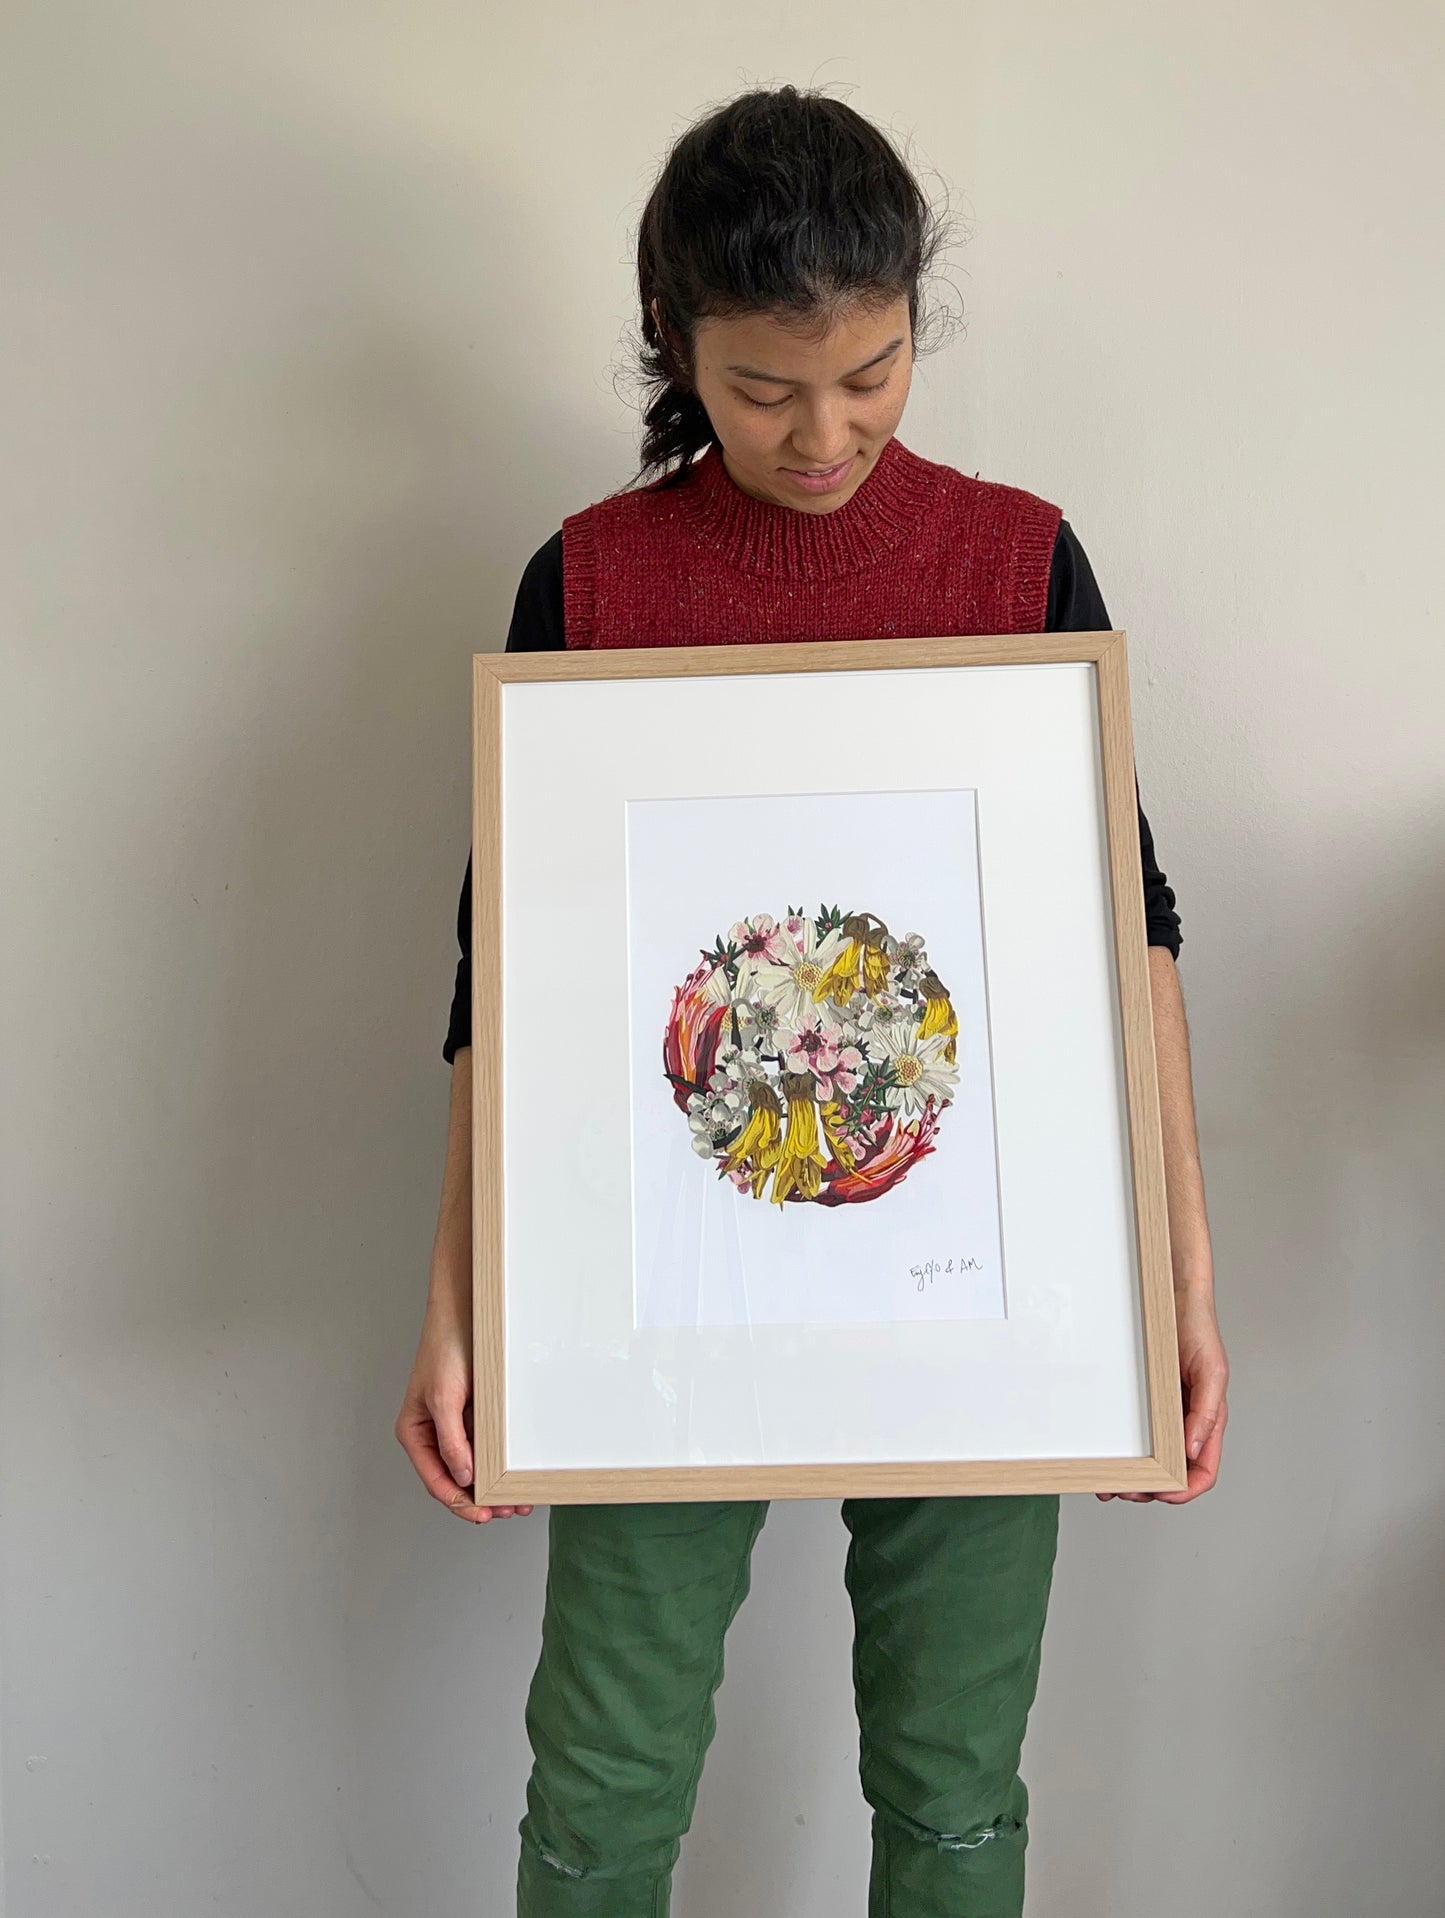 Emy Oikawa holding the framed 'My Floral Sunshine' clay art piece, a collaboration with artist Anna Mollekin.